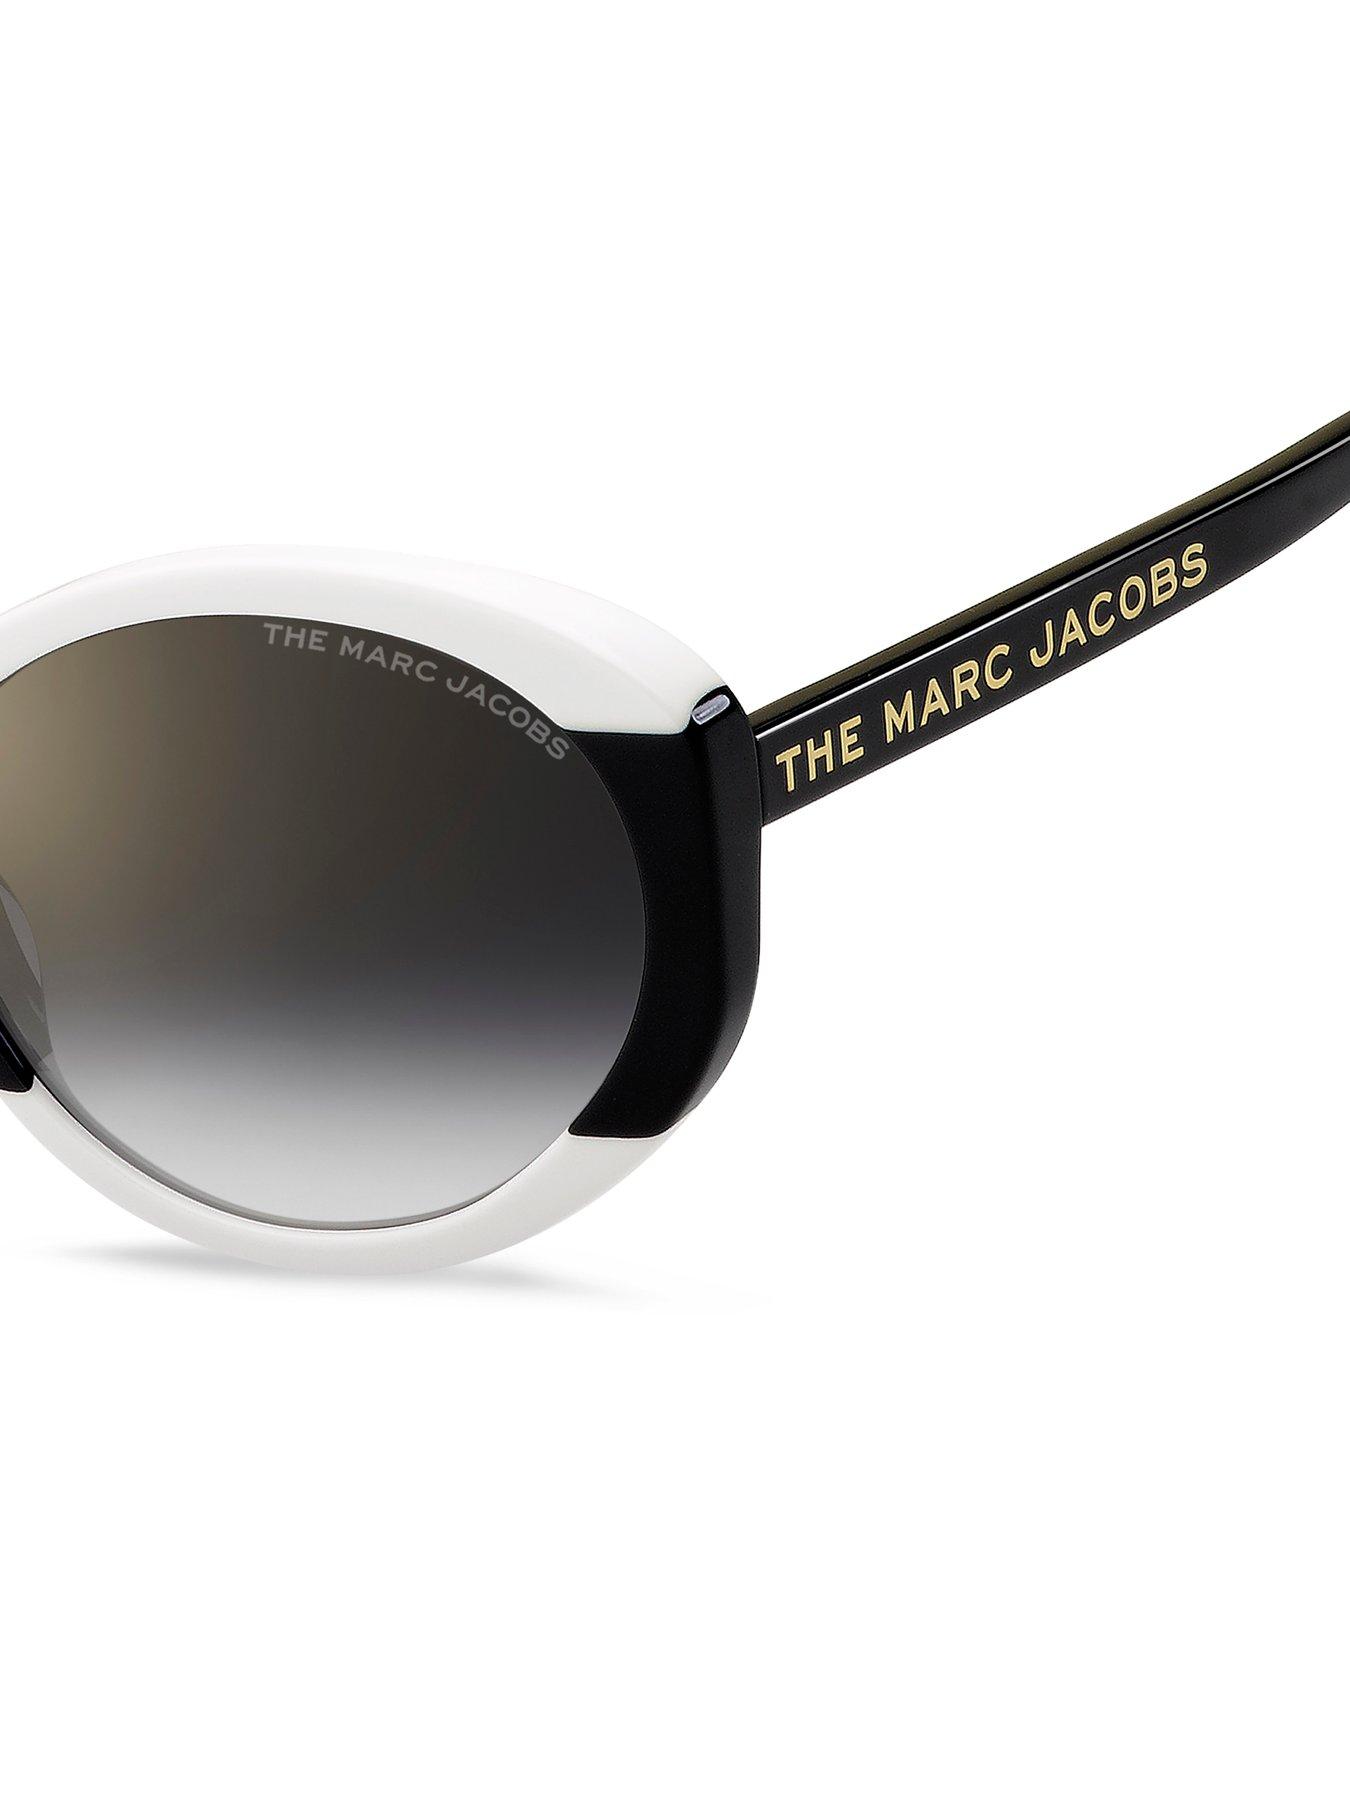 Women Round Oval Sunglasses - Black